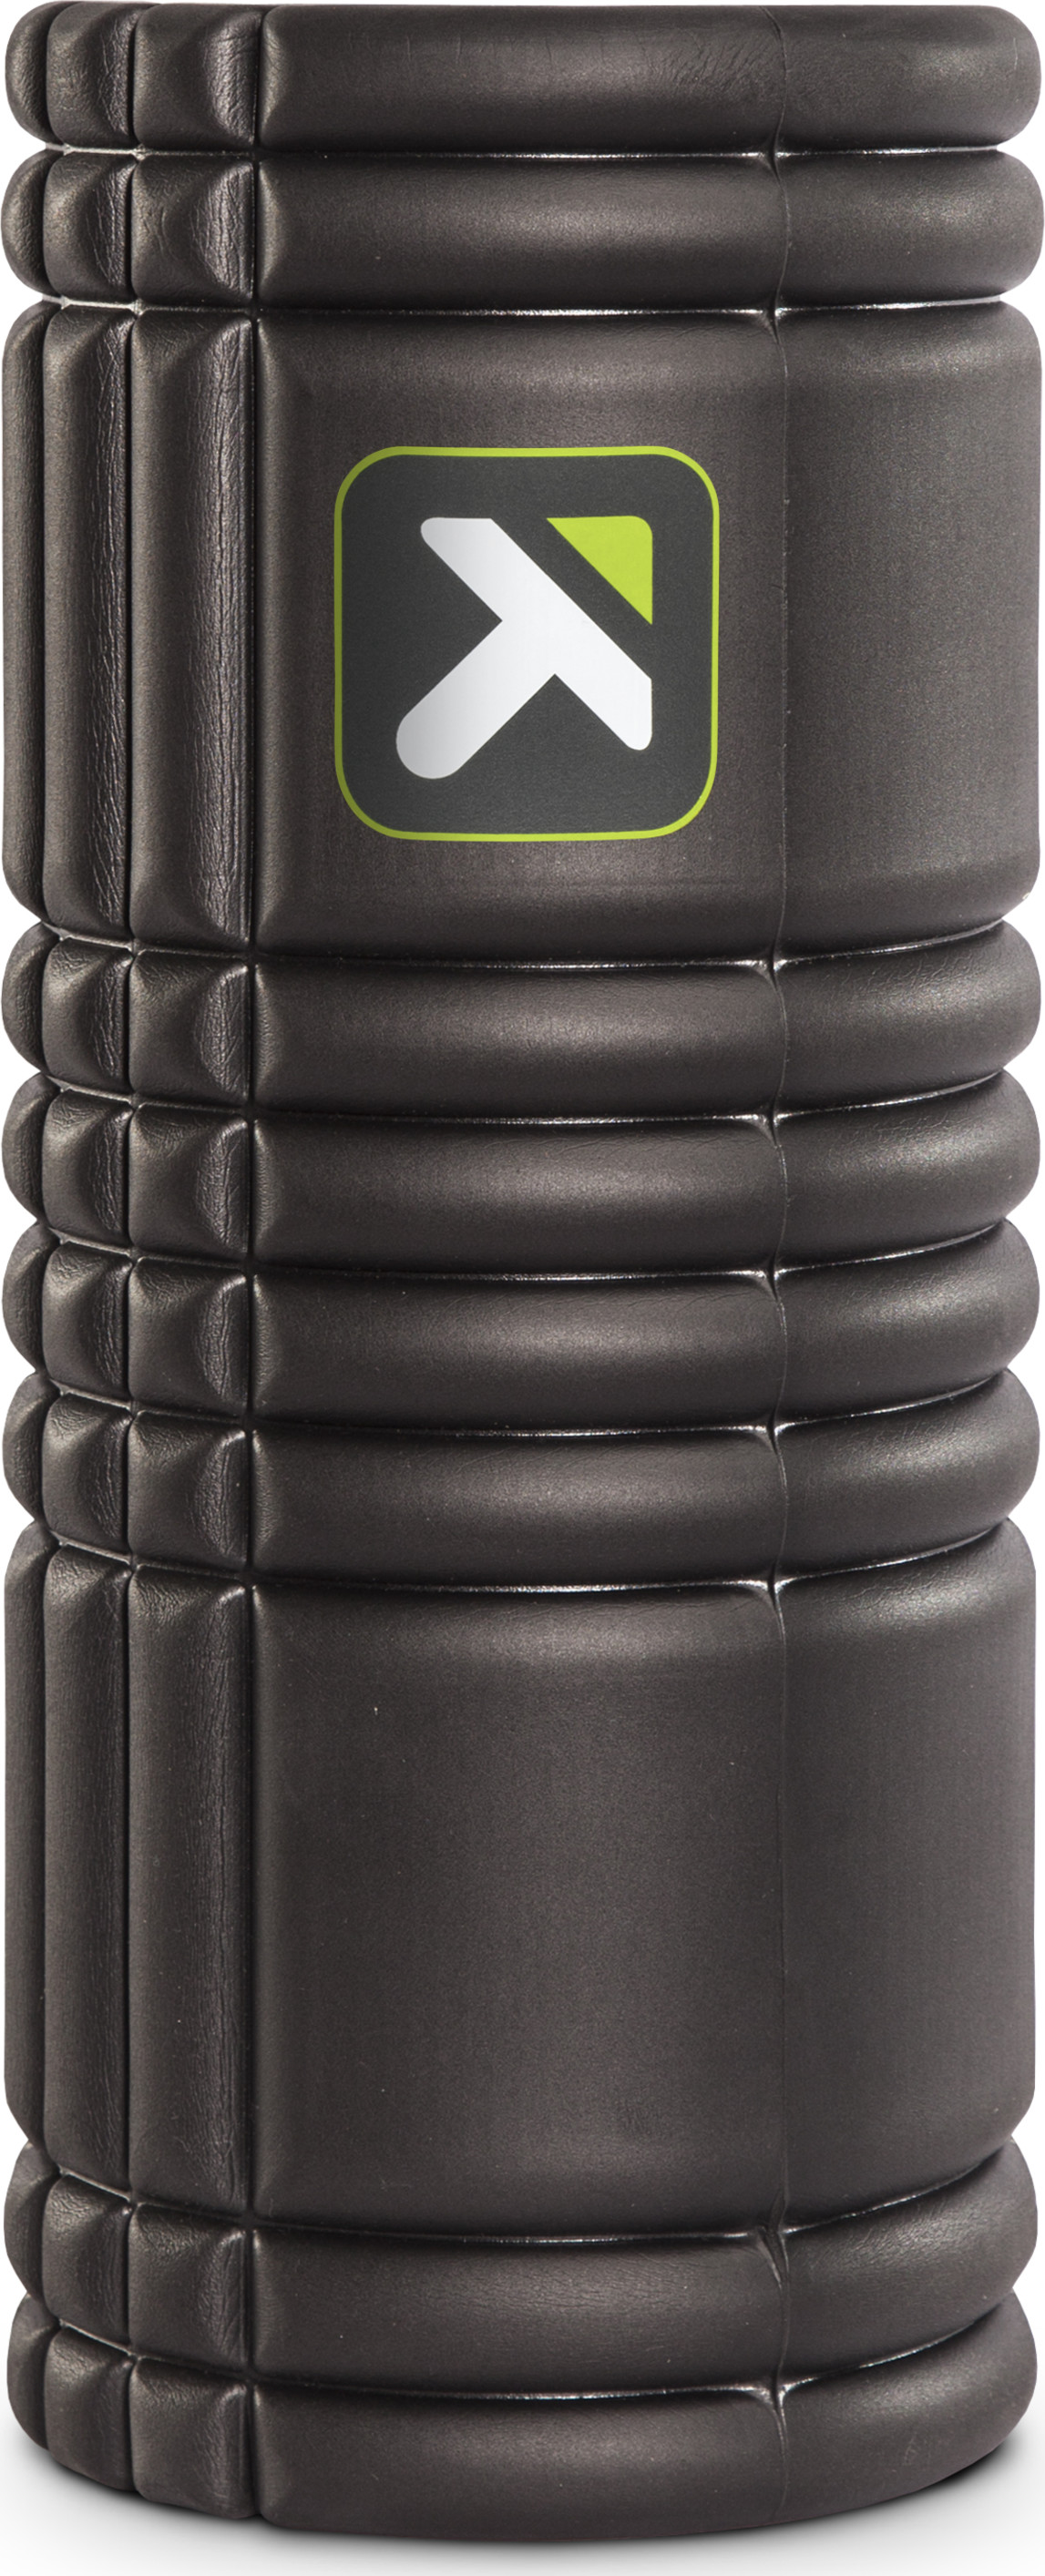 TriggerPoint GRID 1.0 Deep Tissue Massage Foam Roller, Black 13" - image 1 of 10